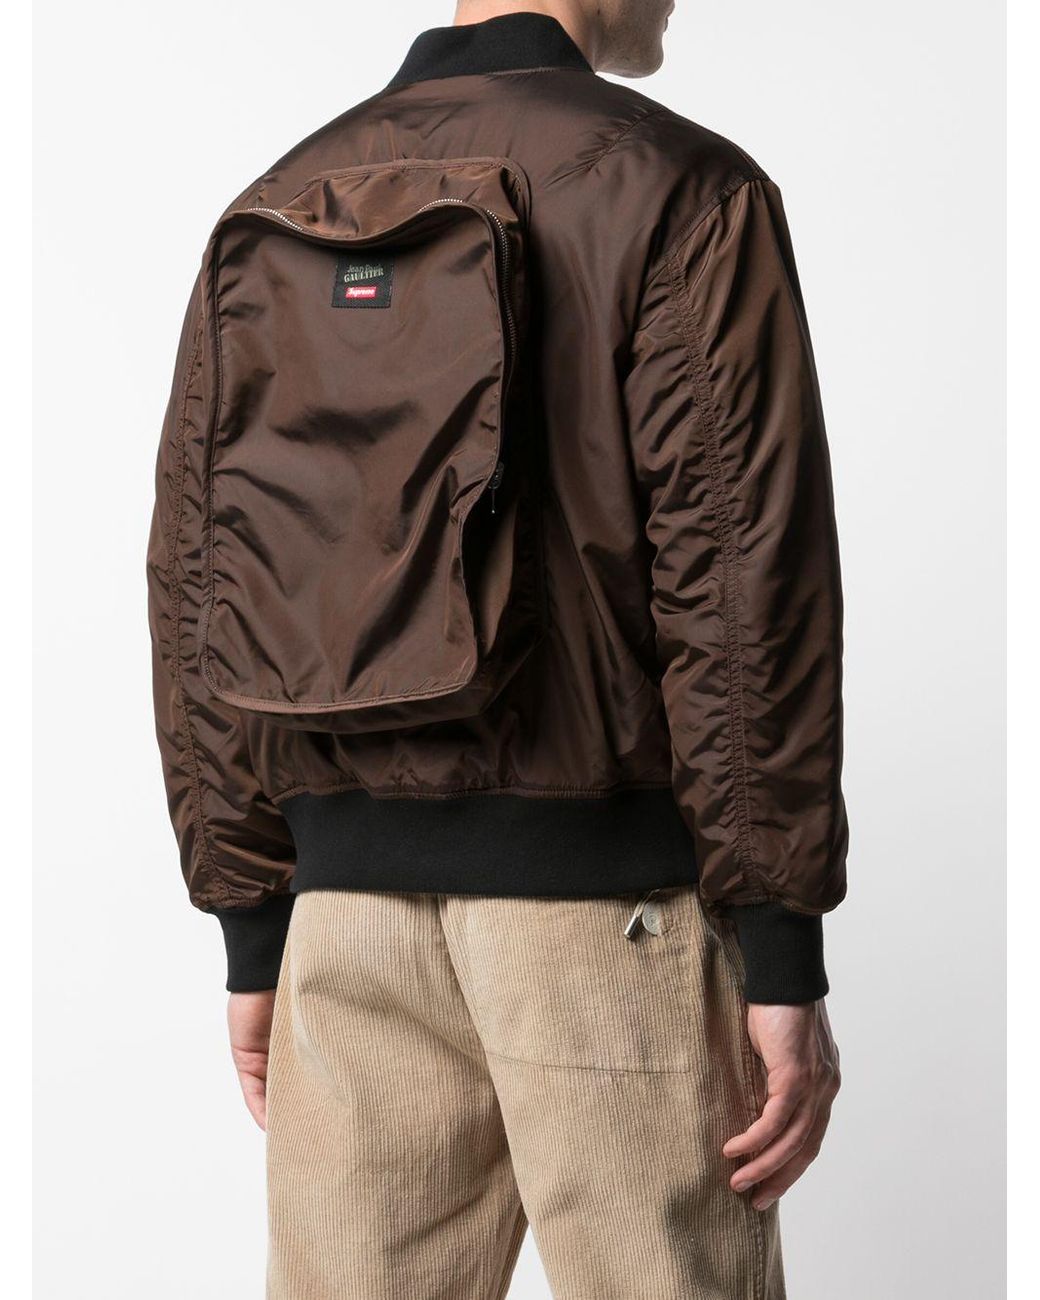 Supreme X Jean Paul Gaultier Backpack Jacket in Brown for Men | Lyst